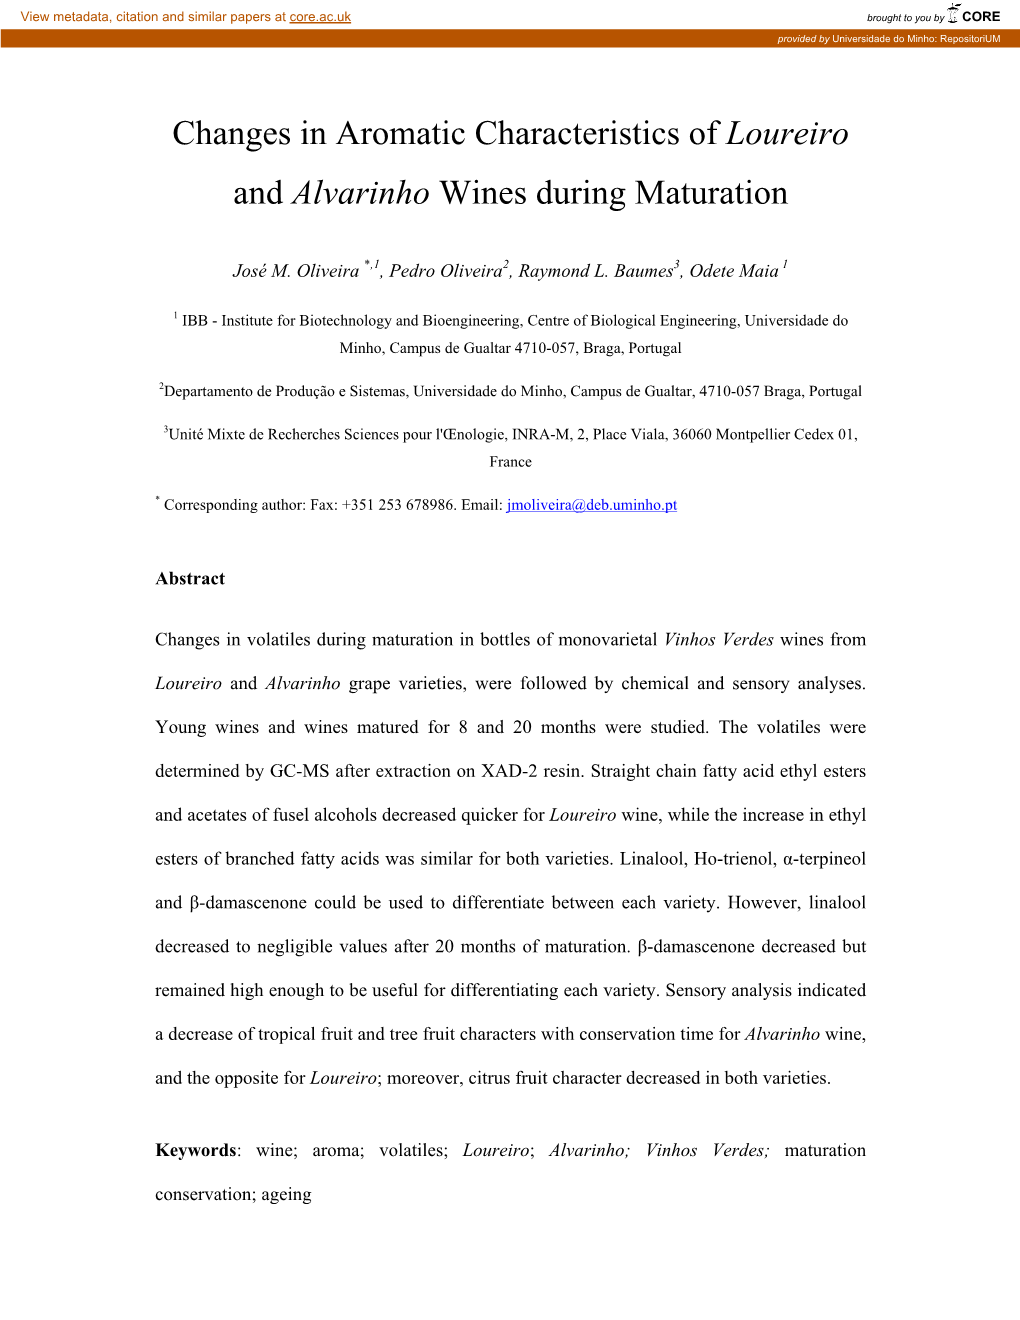 Changes in Aromatic Characteristics of Loureiro and Alvarinho Wines During Maturation